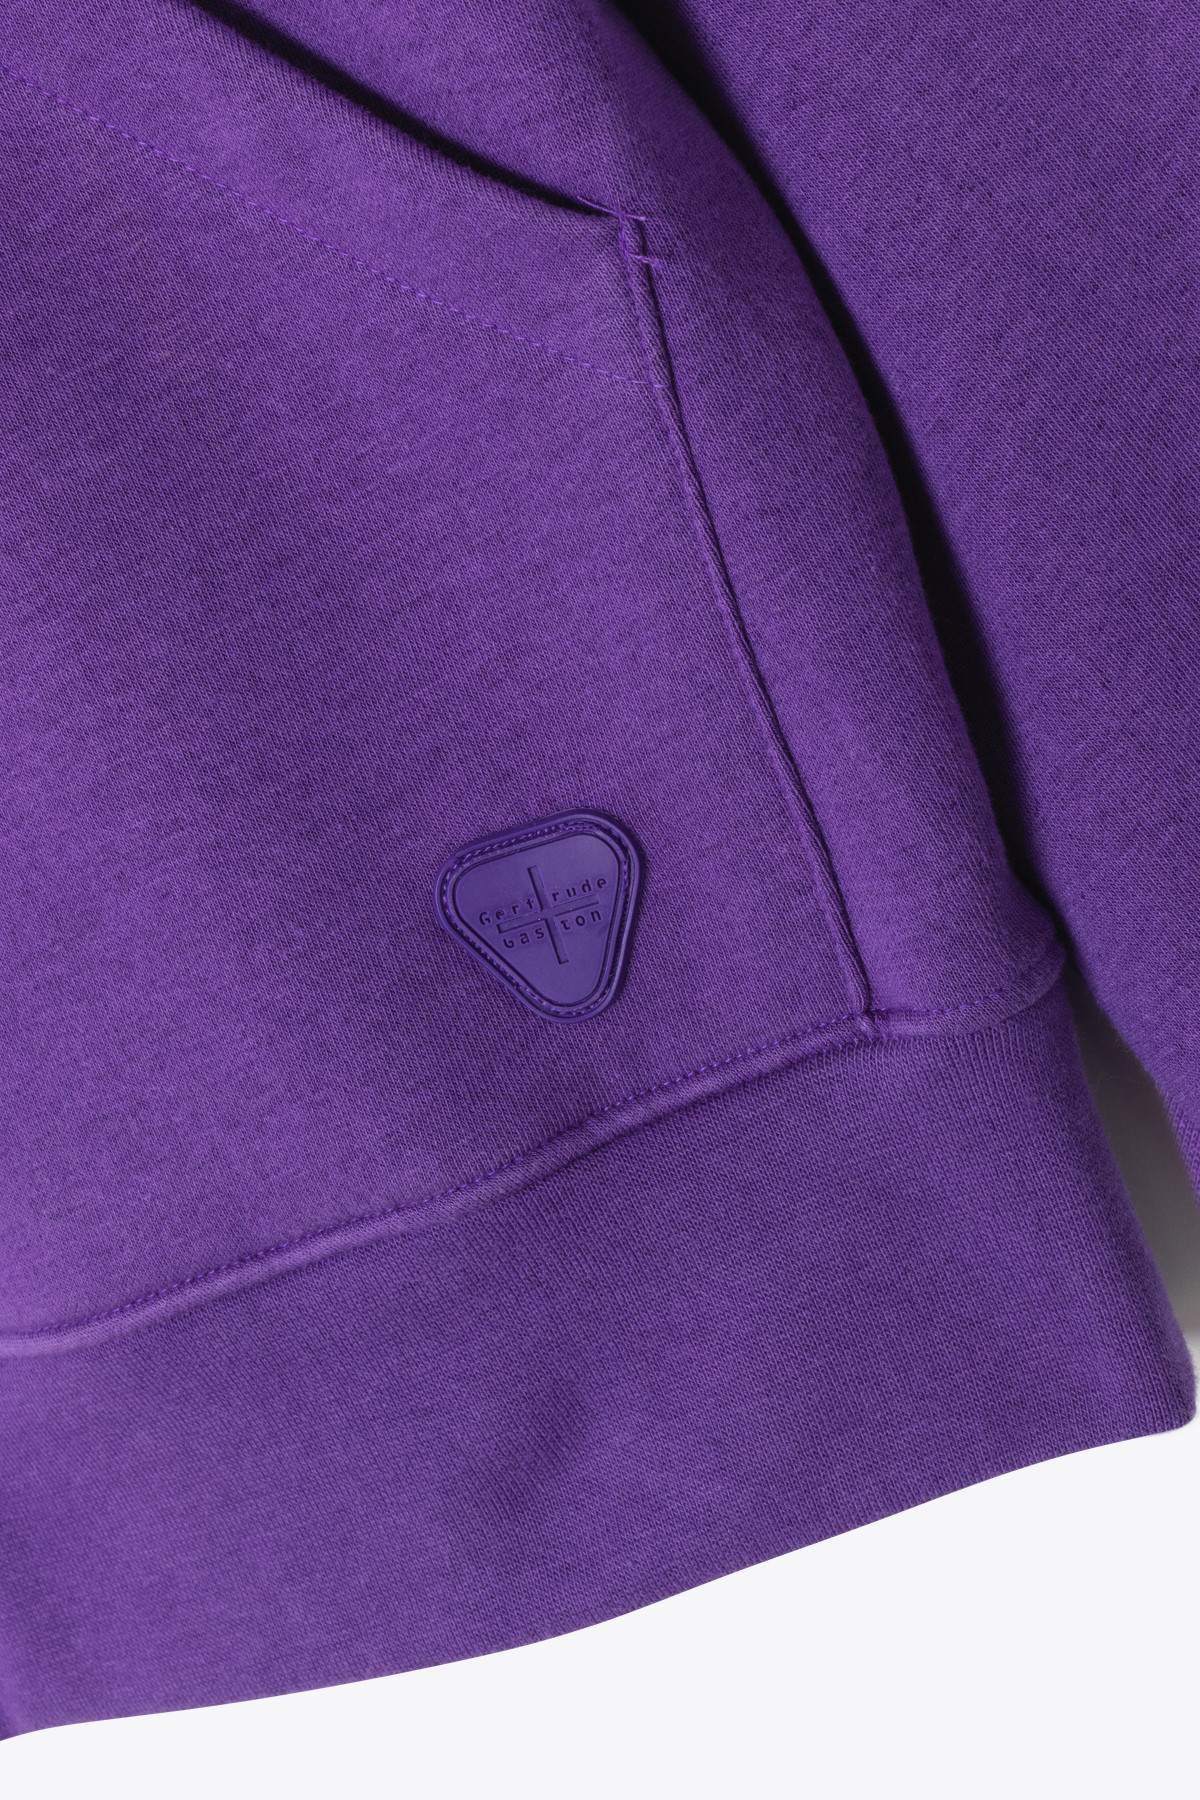 AntoBr hoodie unisex Purple